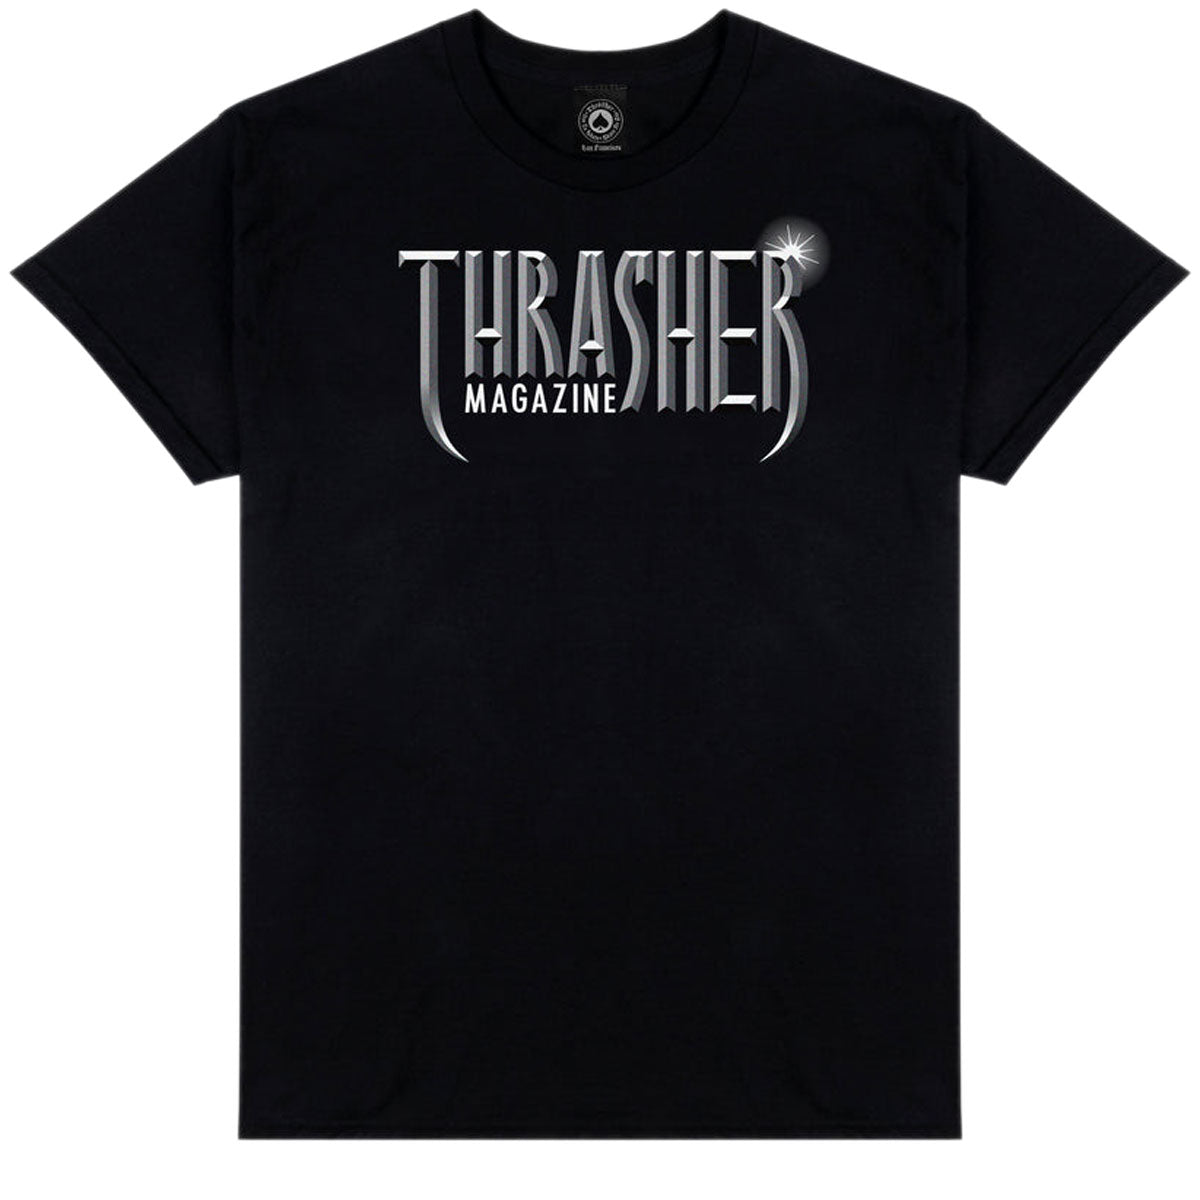 Thrasher Gothic T-Shirt - Black image 1